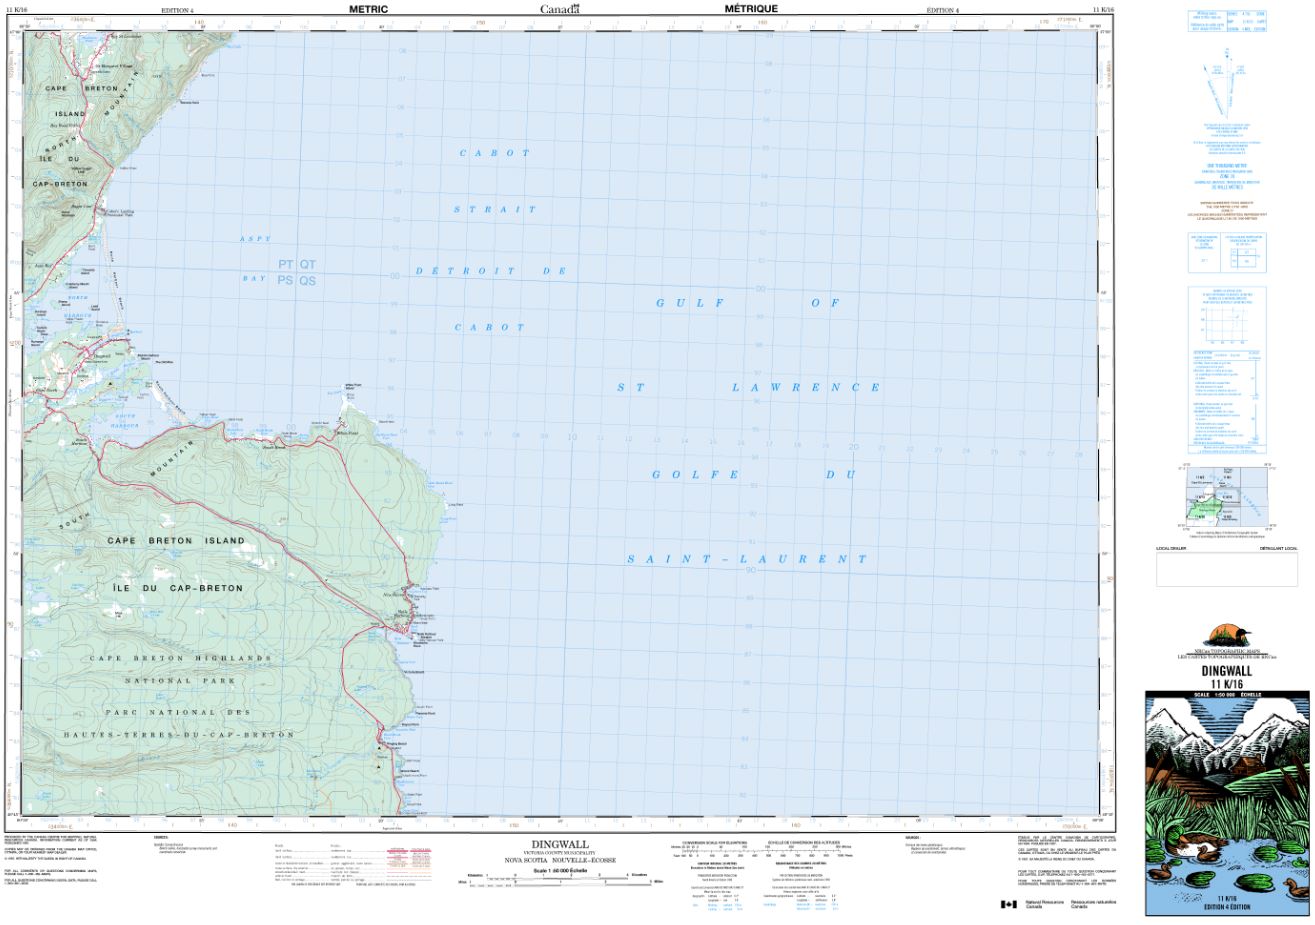 11K/16 Dingwall Topographic Map Nova Scotia